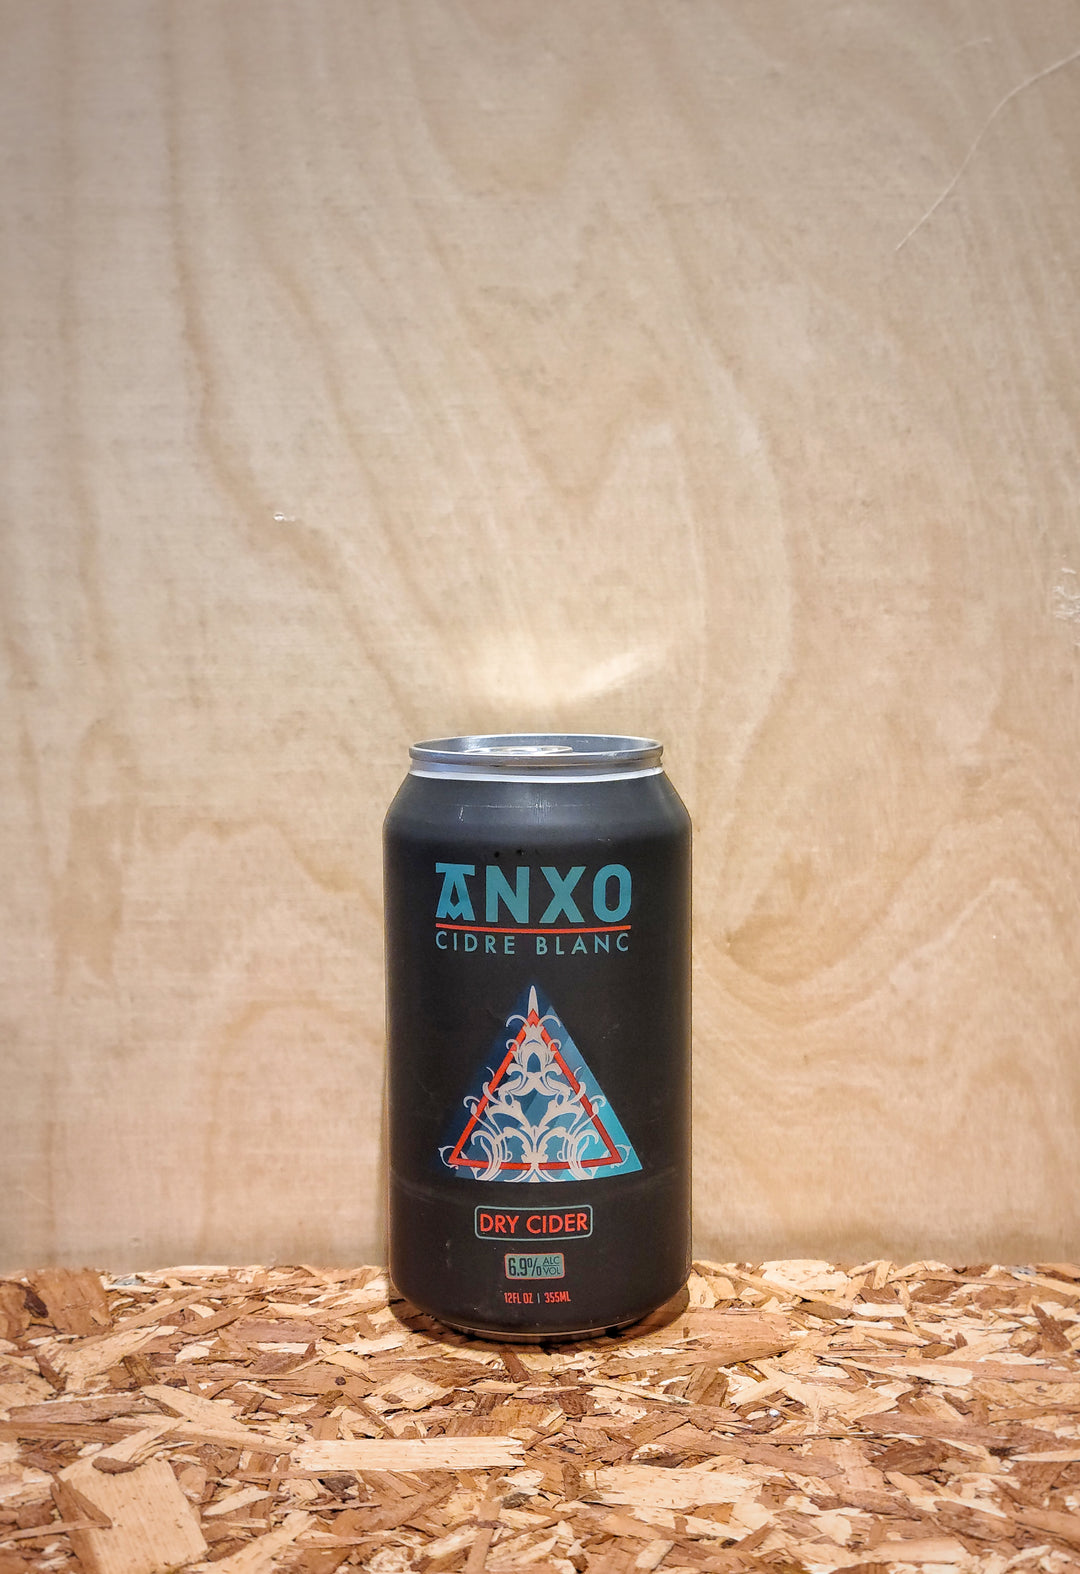 Anxo Cider 'Cidre Blanc' Dry Cider made with White Wine Yeast (Washington D.C.)